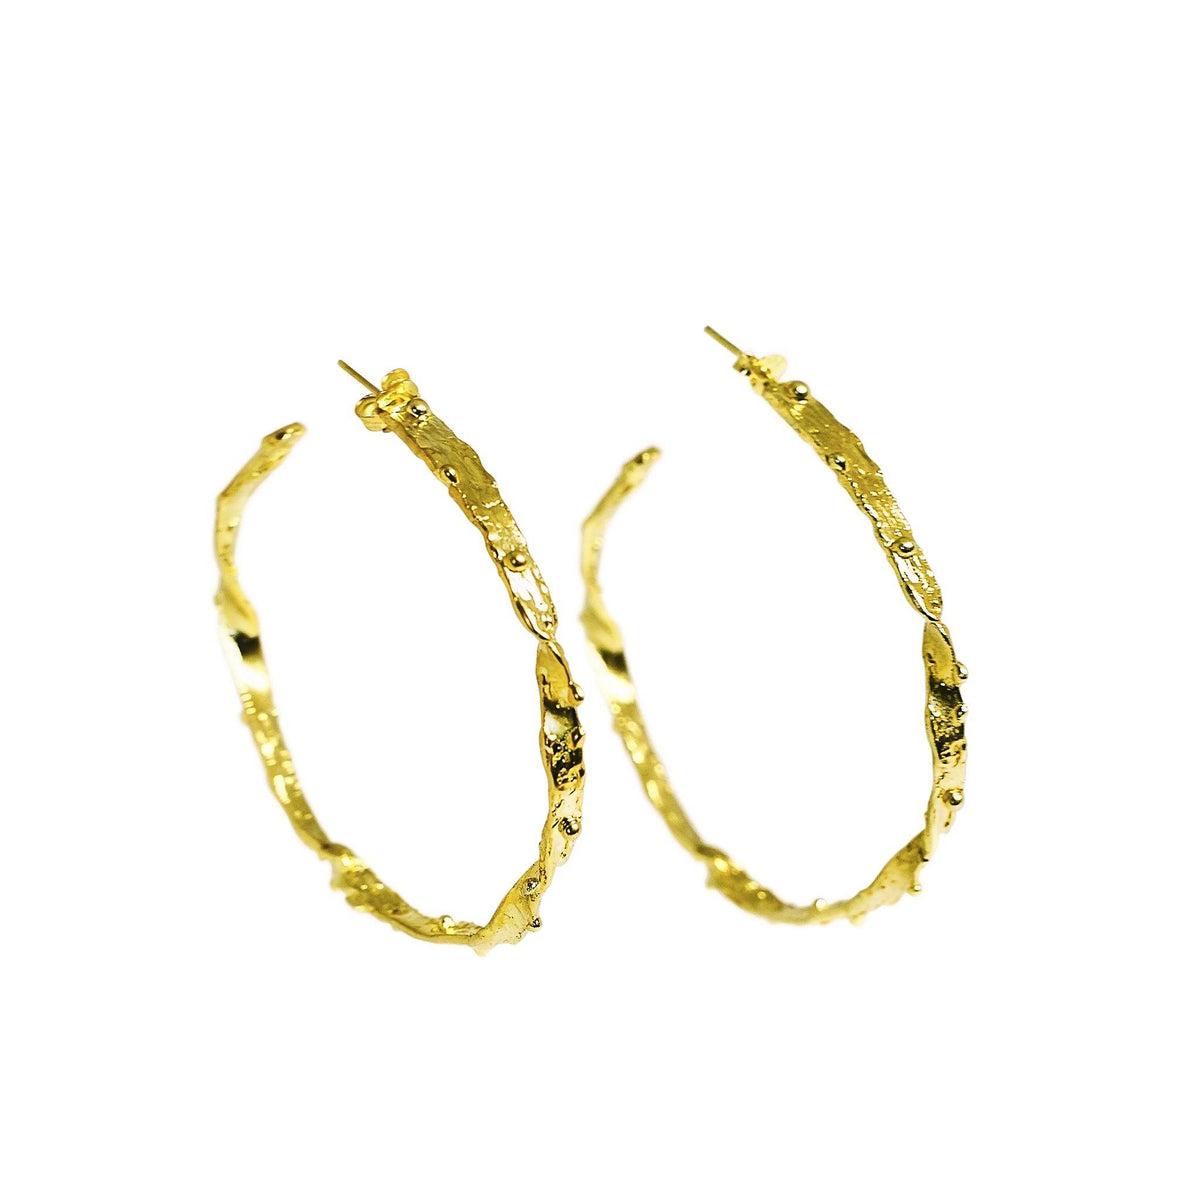 Textured Georgia Gold Hoop Earrings - Tanzire